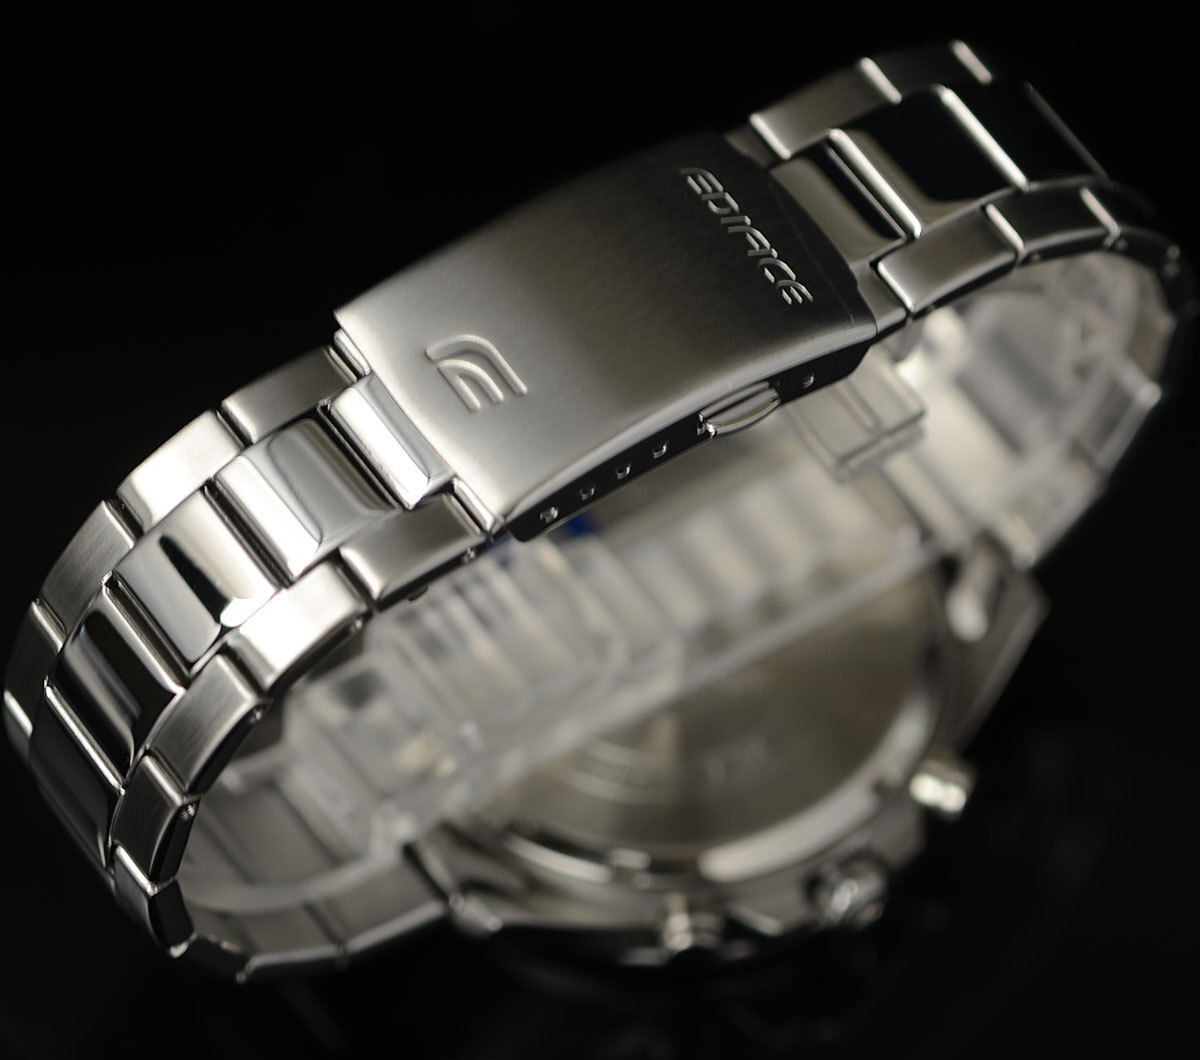  new goods 1 jpy Casio reimport EDIFICE Edifice Europe and America model .. sapphire blue 100m waterproof chronograph wristwatch CASIO men's genuine article 